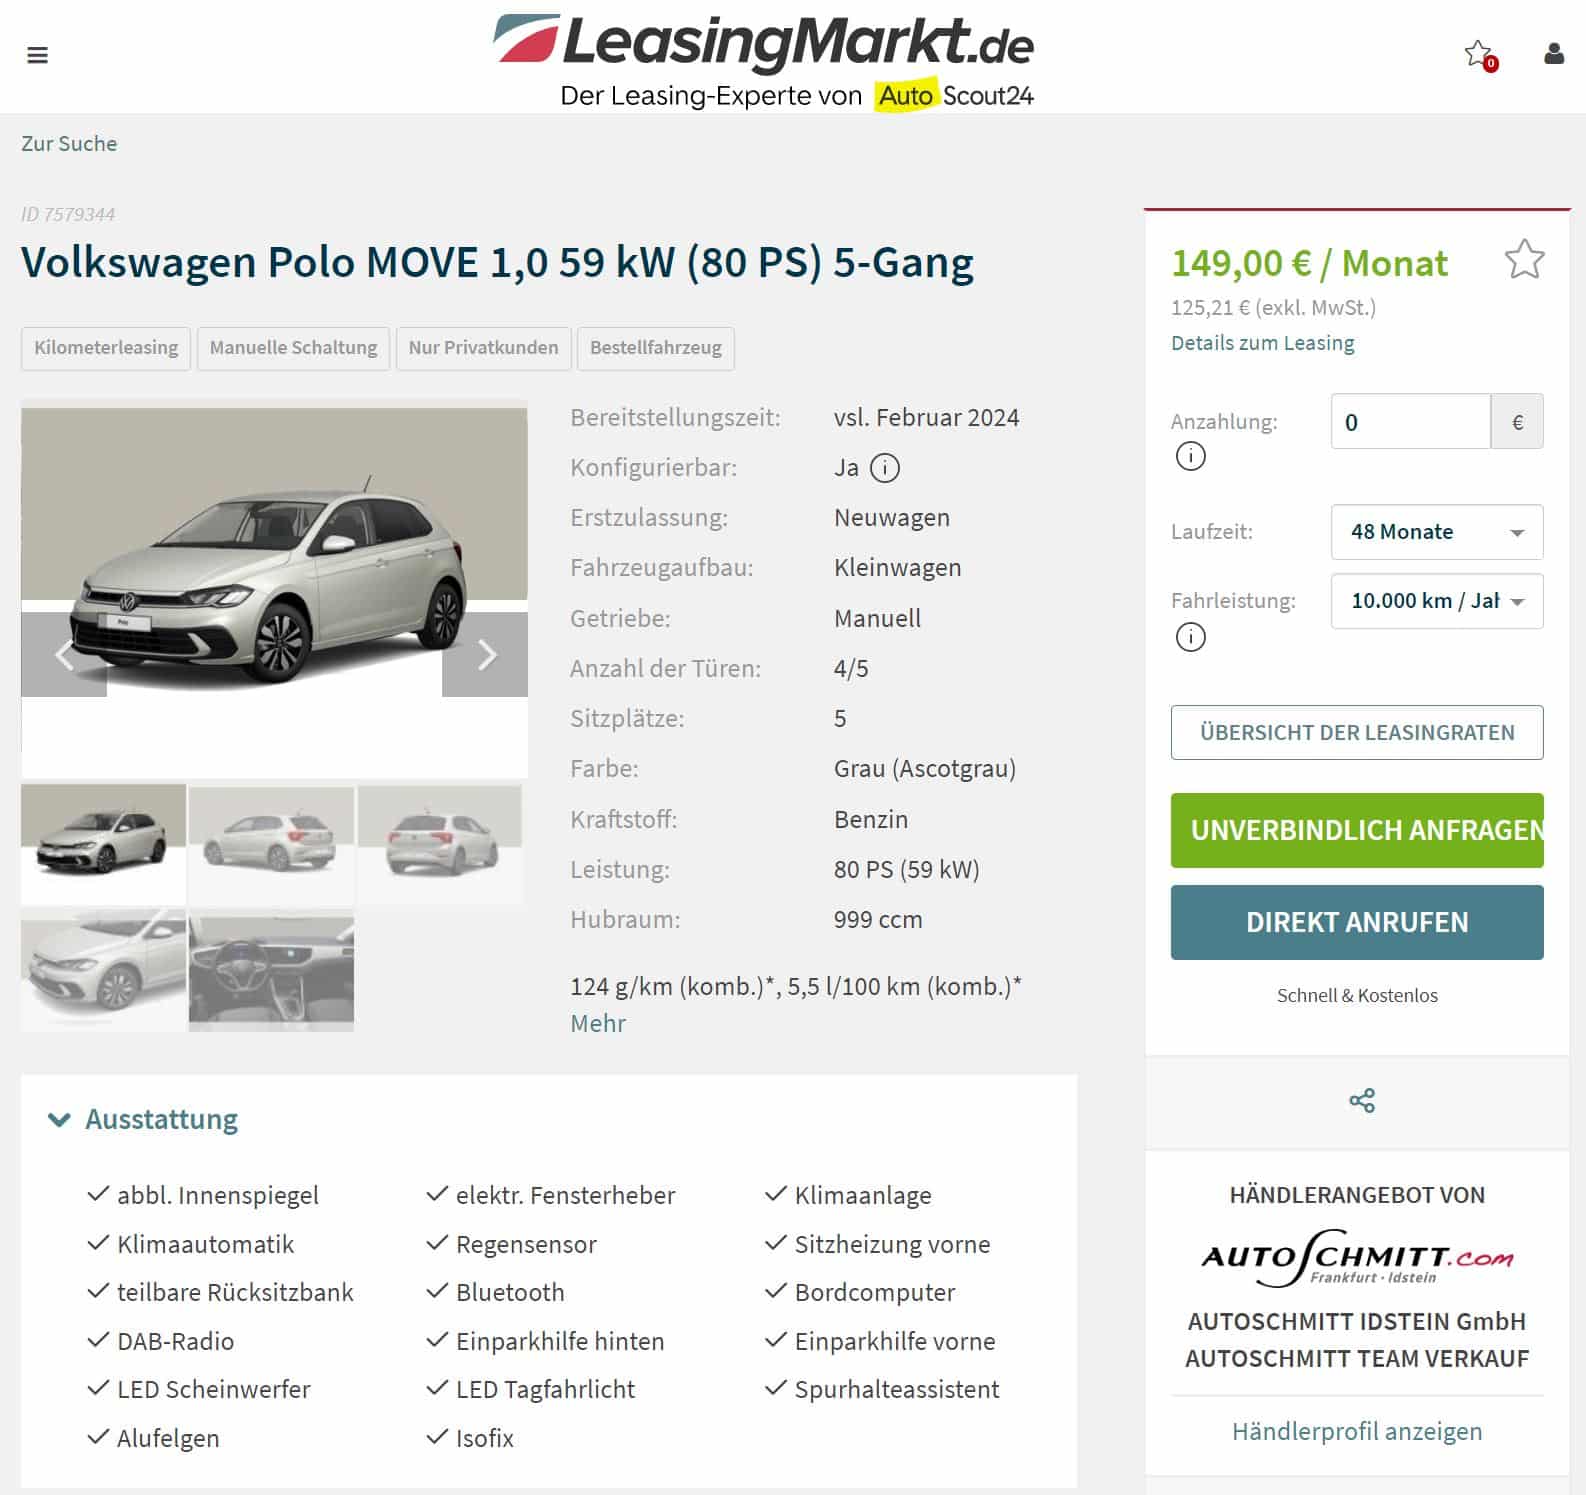 VW Polo im Leasing für 149 Euro im Monat brutto - ntv Autoleasing